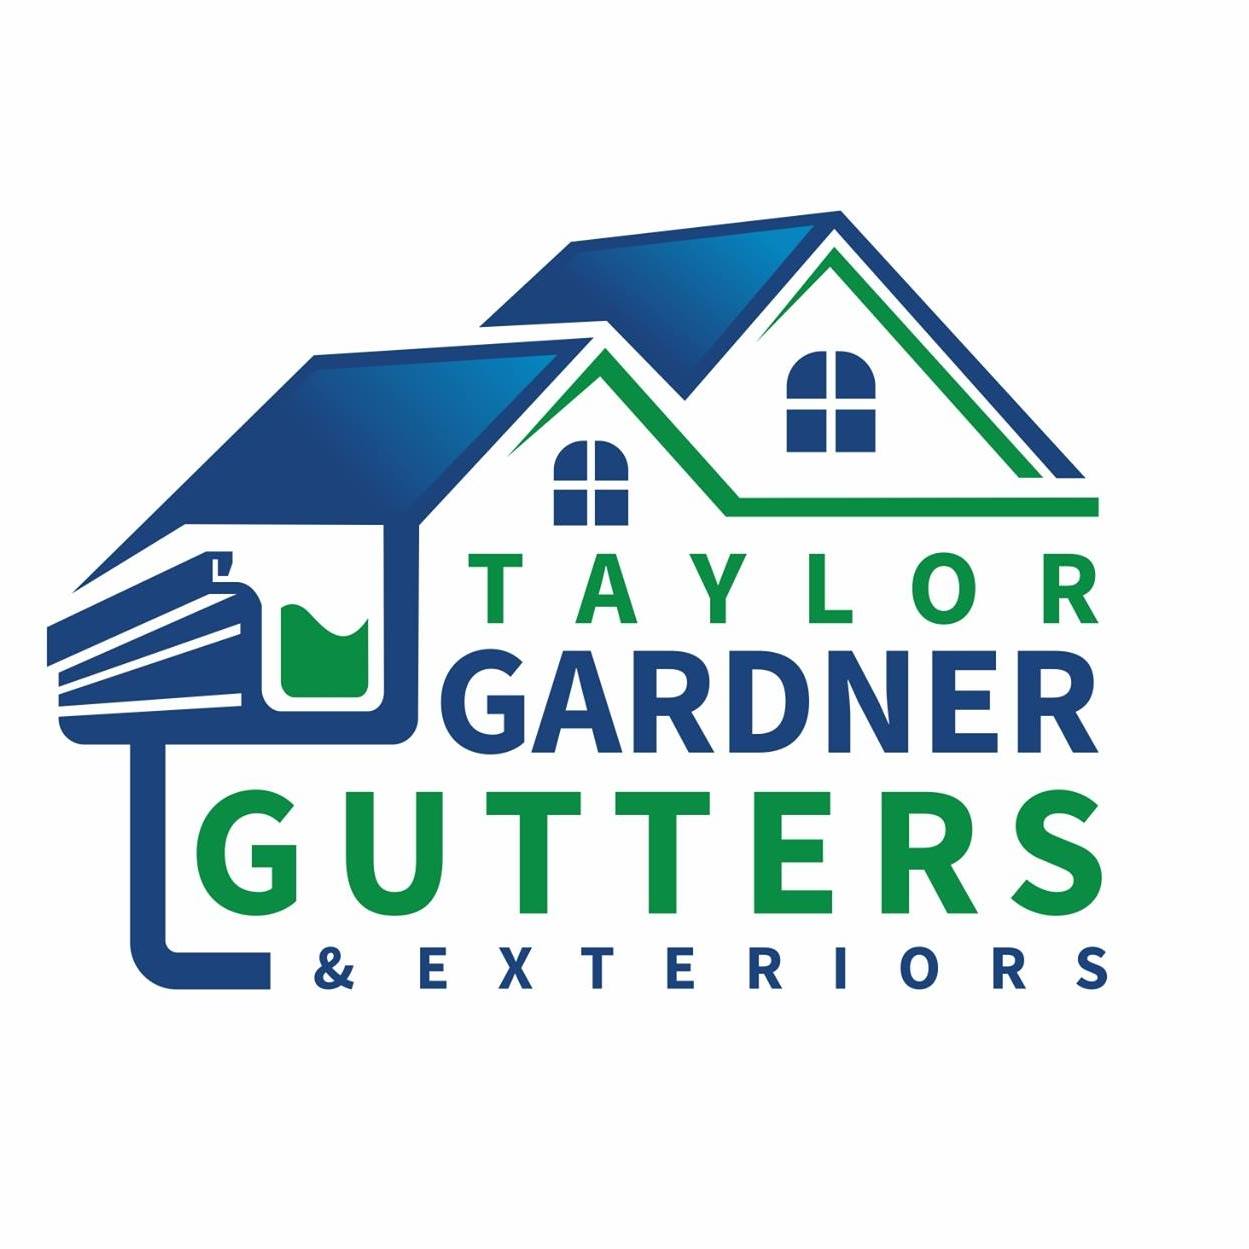 Taylor Gardner Gutters & Exteriors Logo